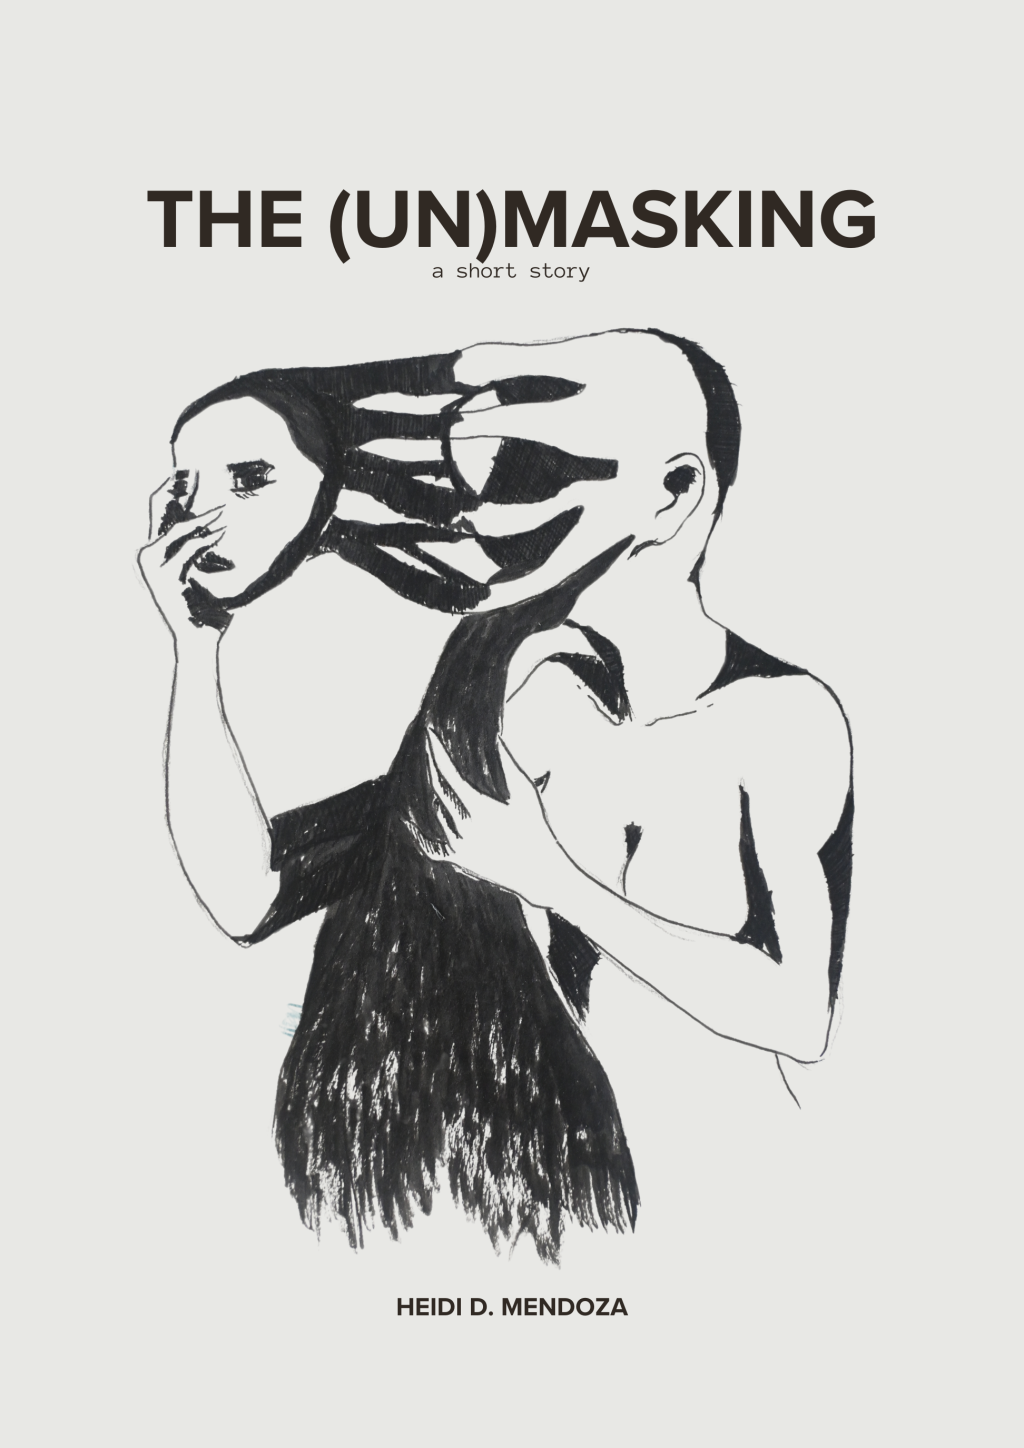 The (un)masking